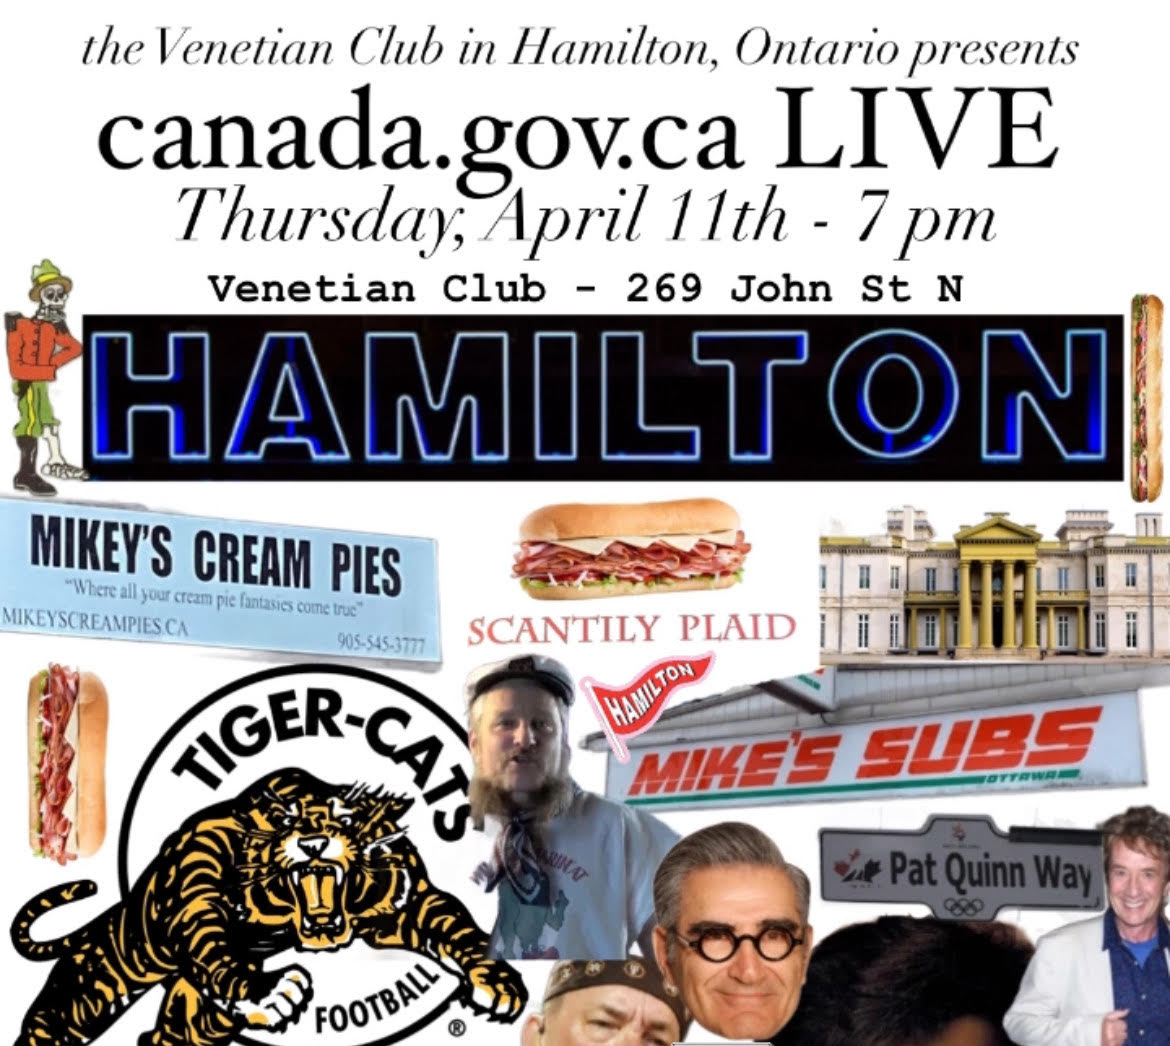 HAMILTON canada.gov.ca LIVE at The Venetian Club